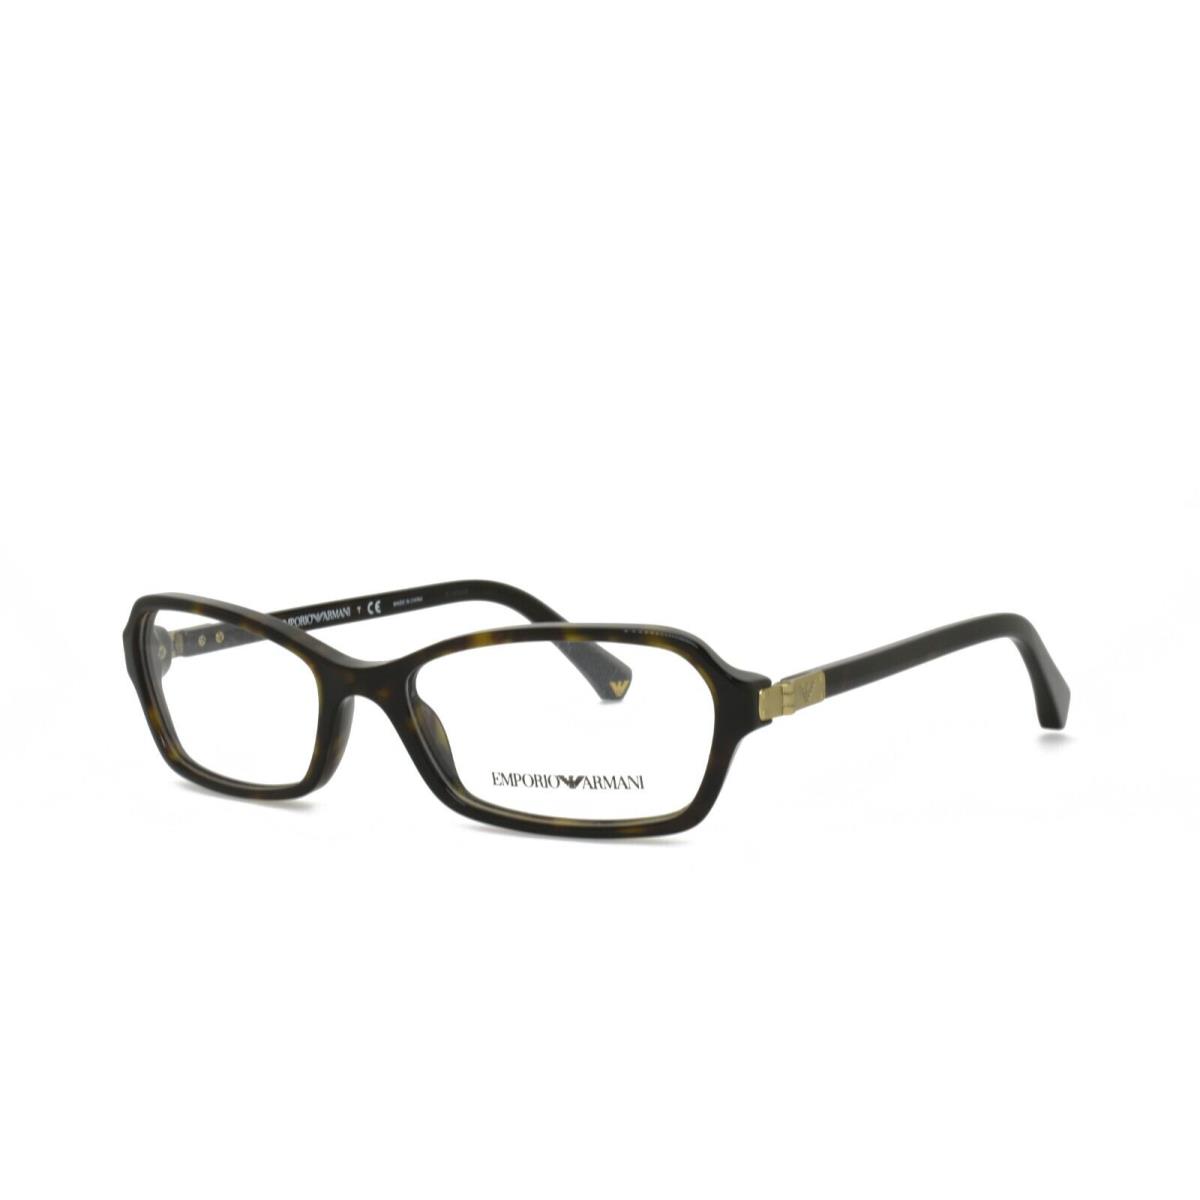 Emporio Armani 3009 5026 52-16-135 Tortoise Eyeglasses Frames